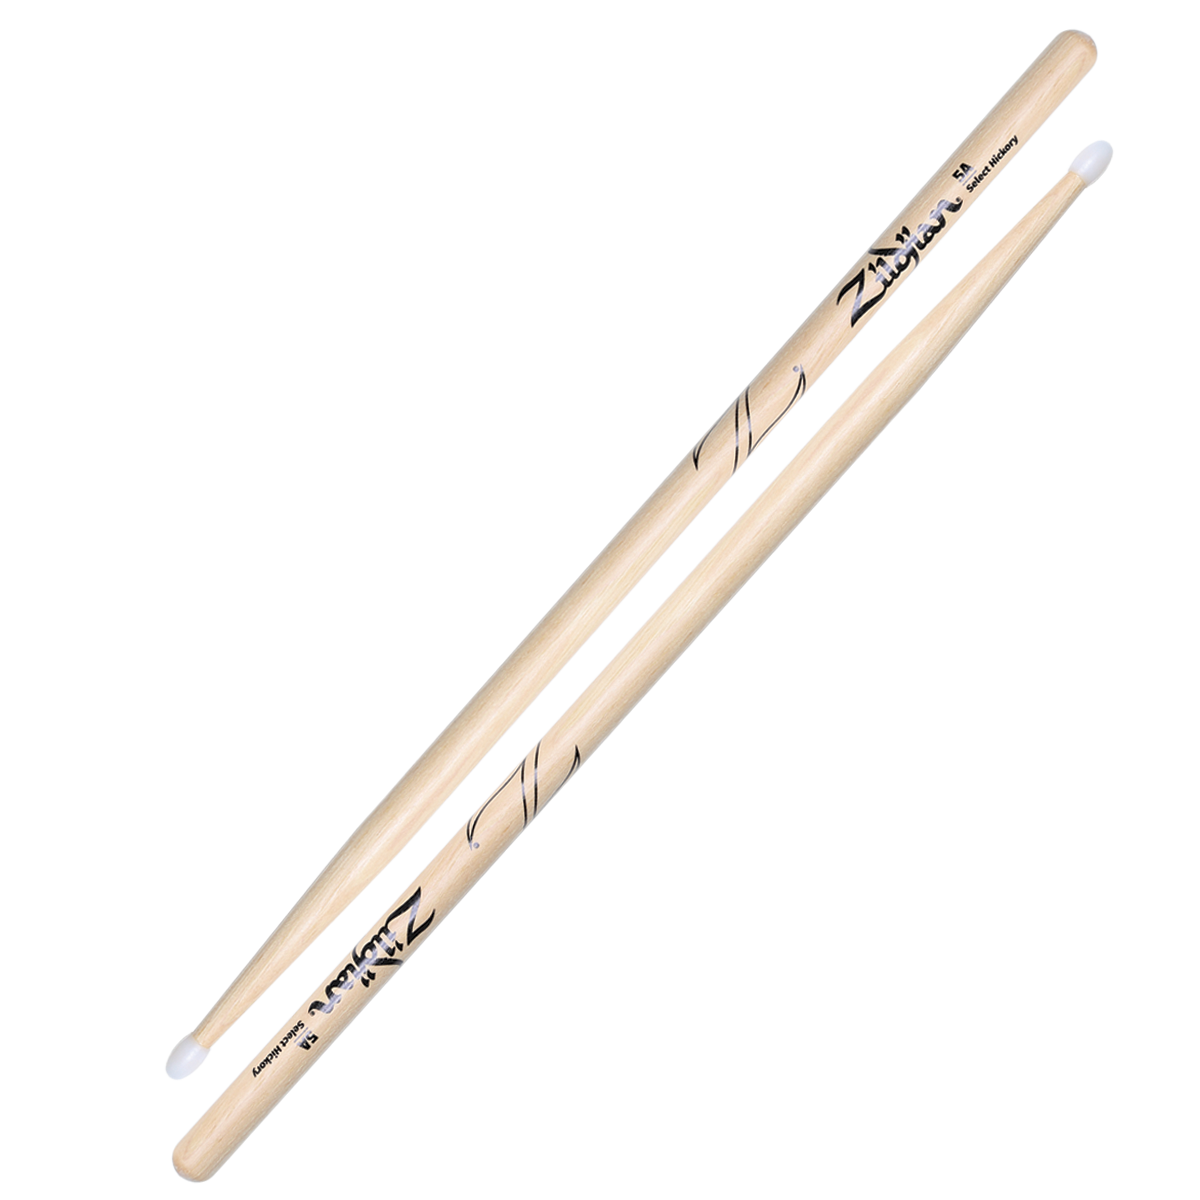 5A Nylon Drumsticks